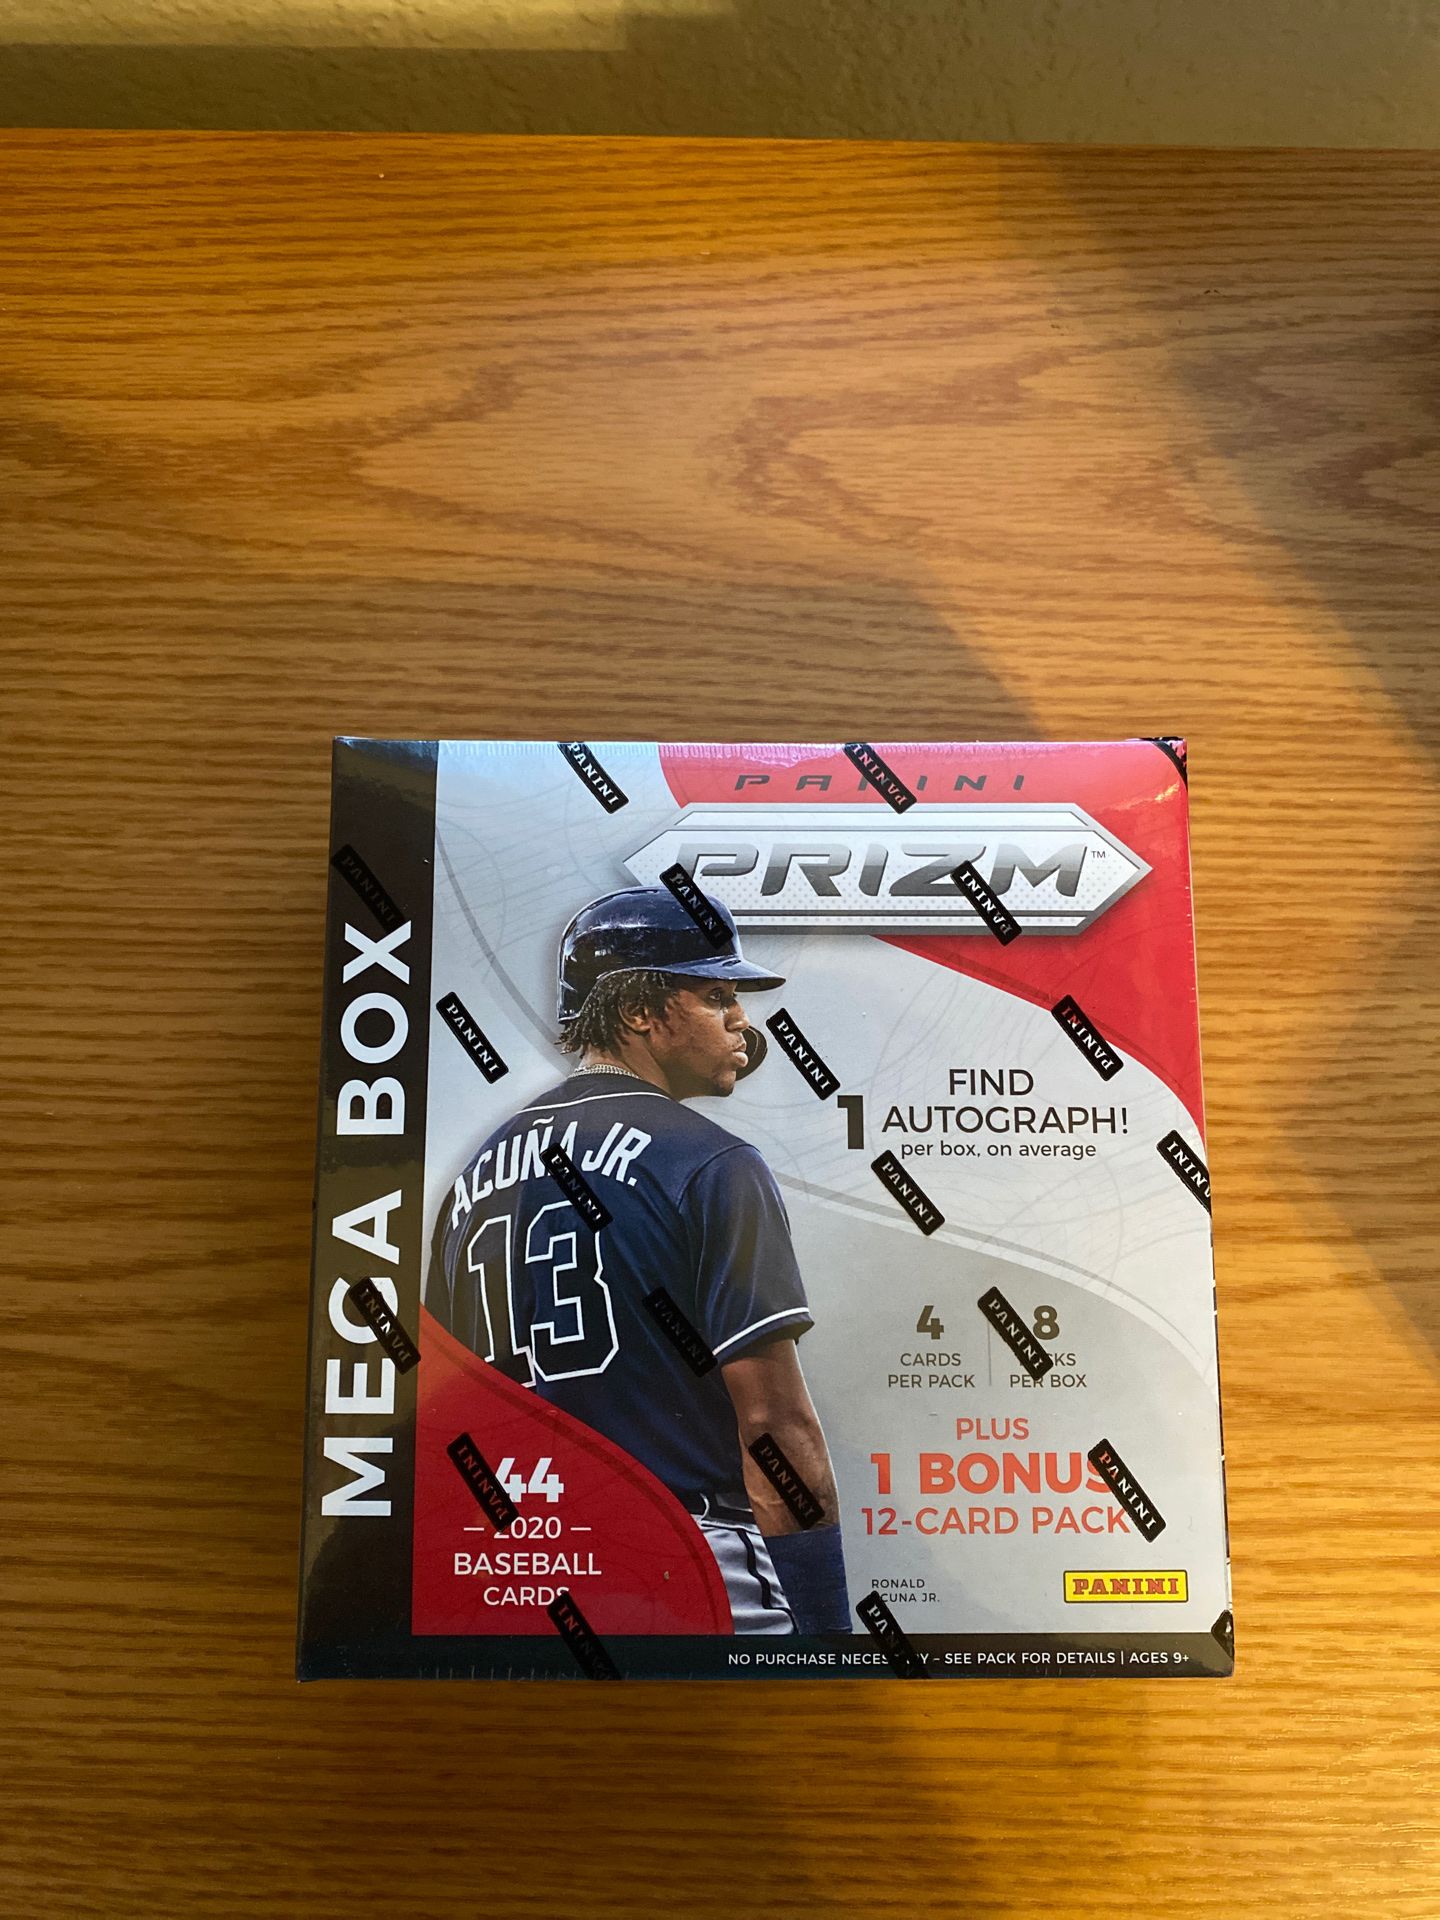 2020 panini prizm Baseball cards mega box . Find one auto plus 1 bonus - 12 -card pack